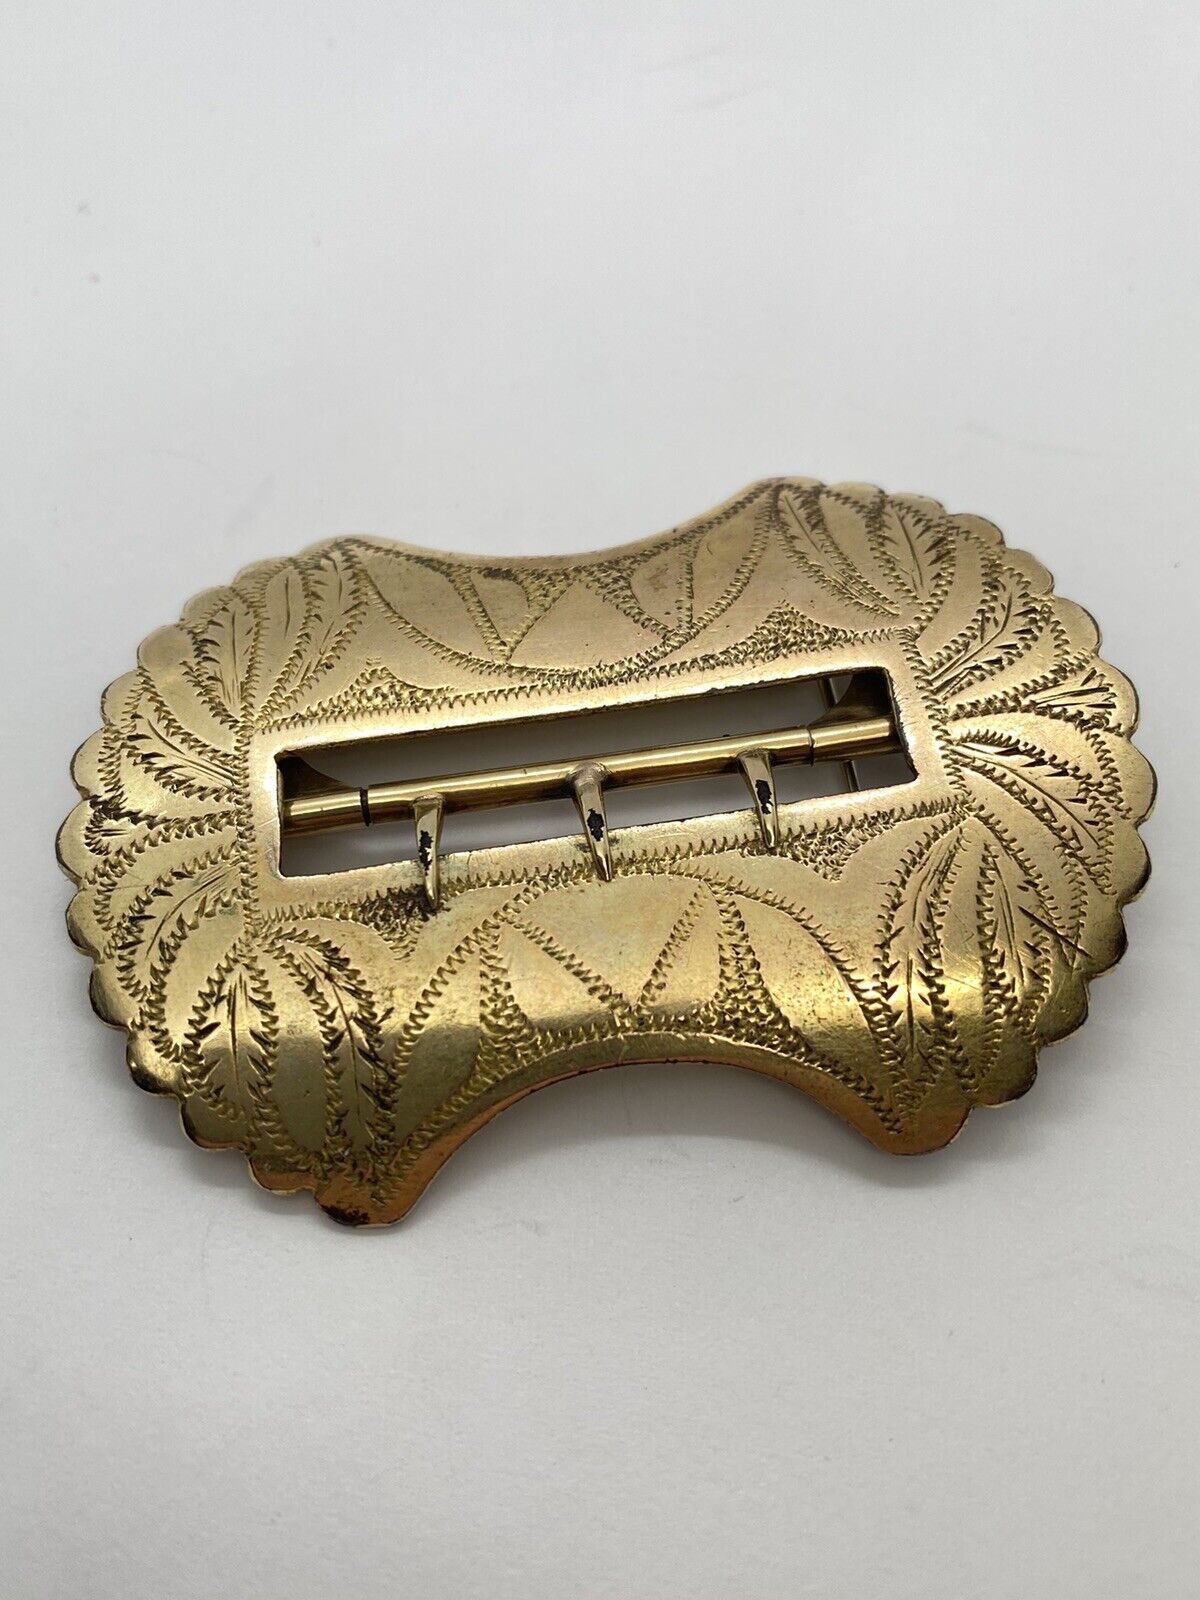 Antique Art Nouveau Foliate Belt Buckle Brooch Pin Gold Filled 22.4g Vintage